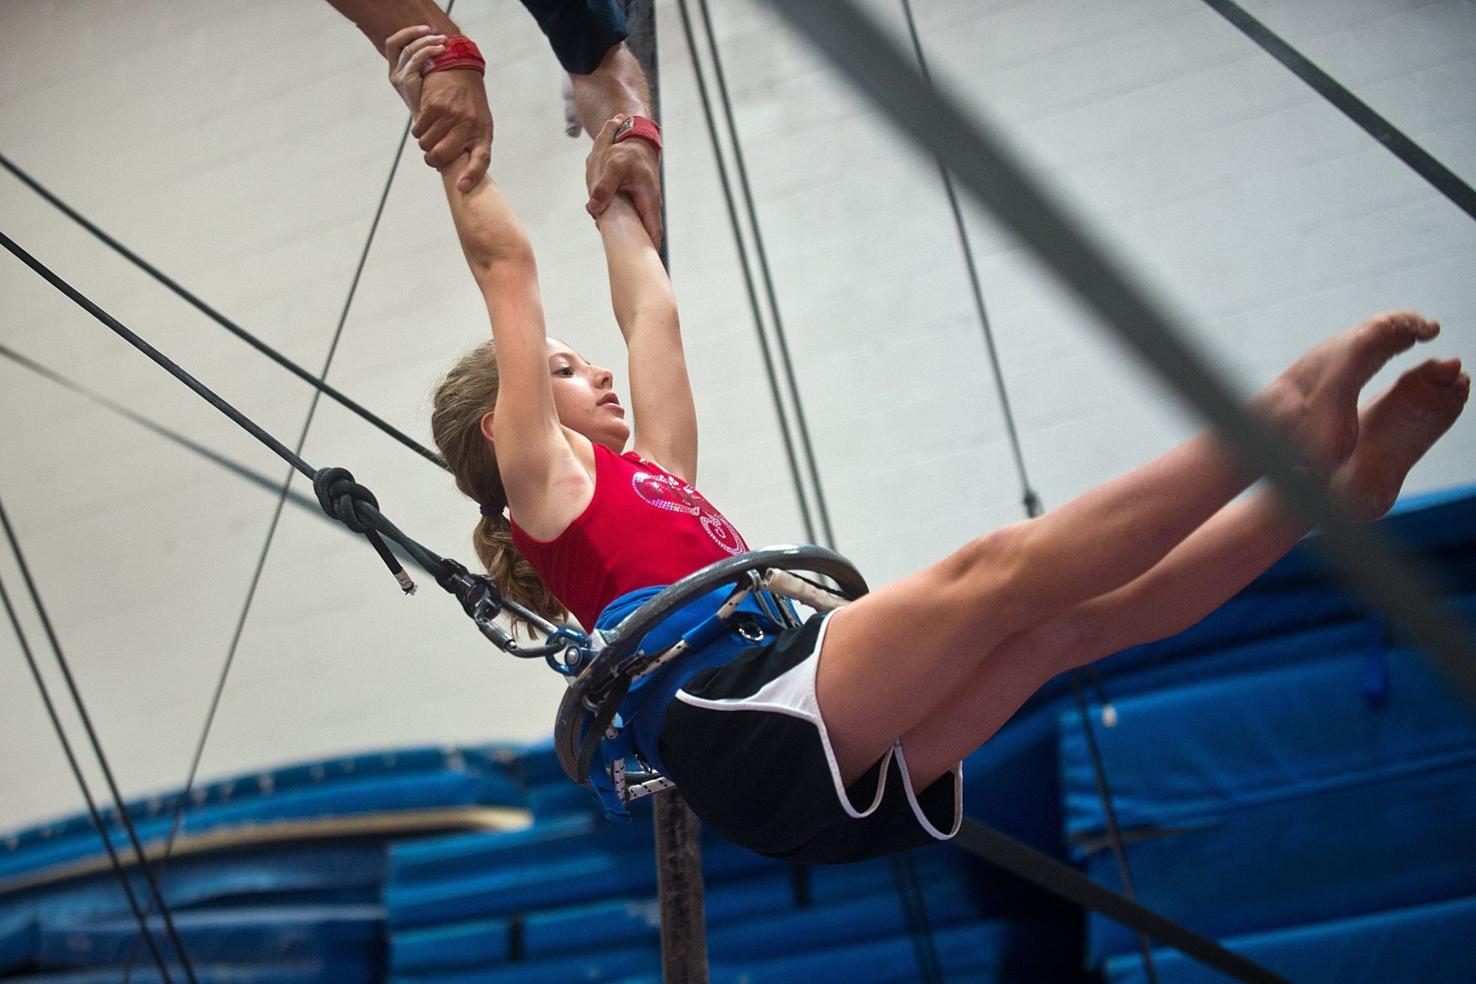 Passions take flight at ISU circus camp